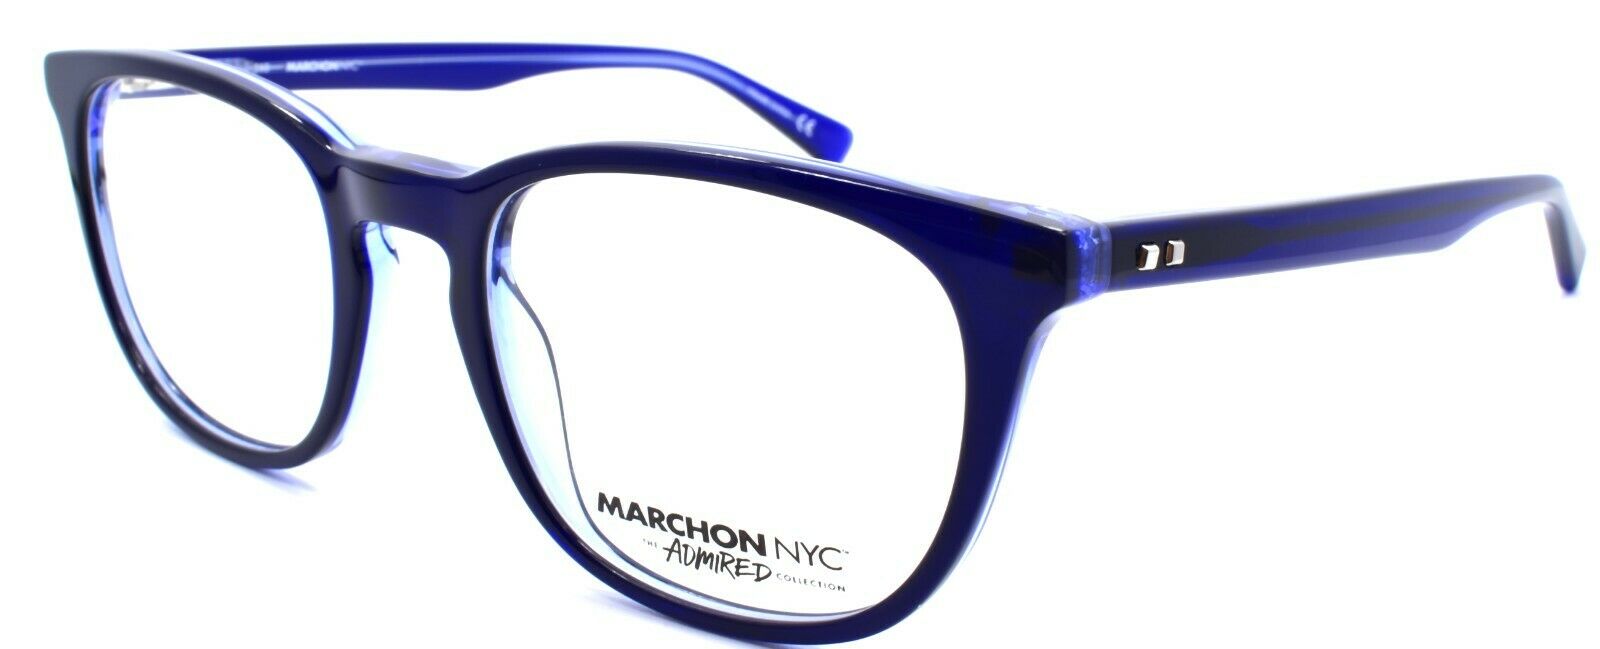 1-Marchon M3506 412 Men's Eyeglasses Frames 51-20-140 Navy-886895483469-IKSpecs